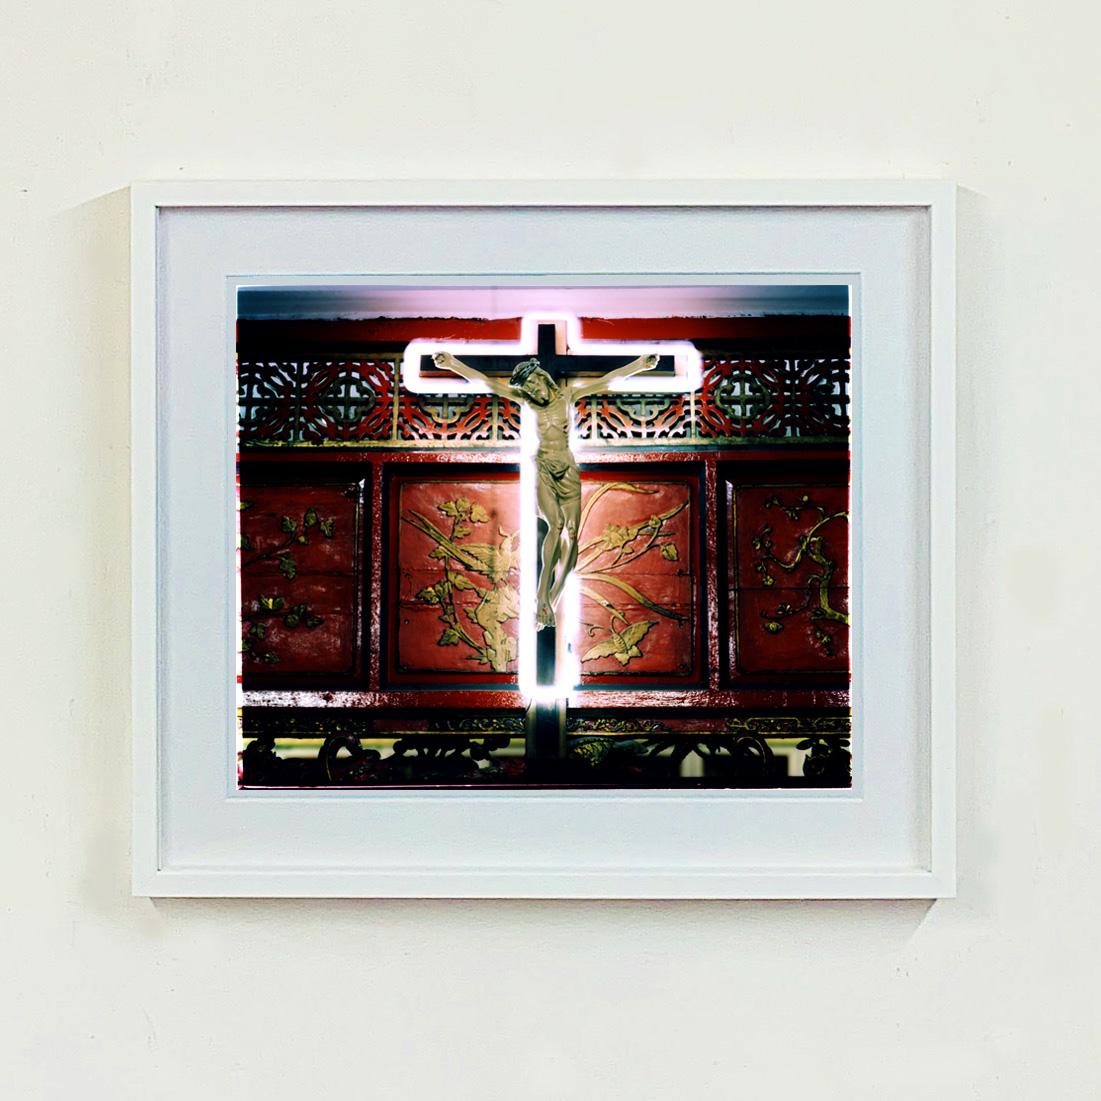 Neon Cross, Ho Chi Minh City (Saigon) - Religious kitsch color photography For Sale 1